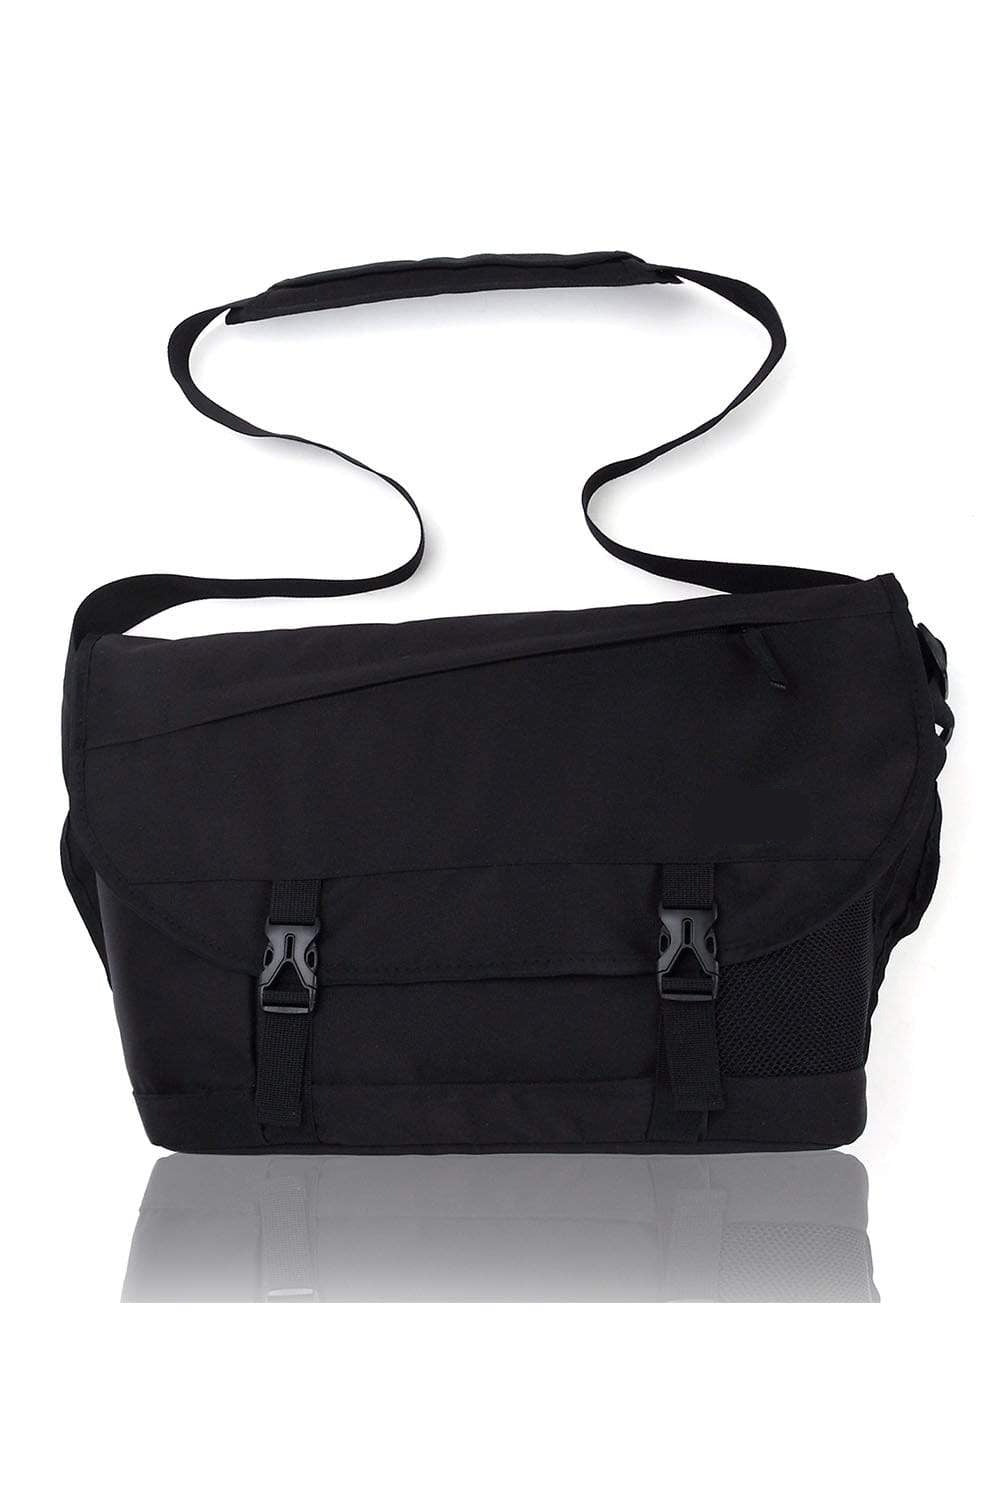 Dark Blue Designer Messenger Laptop Bag Fashionable Waterproof Protective  Computer Case Travel Bags